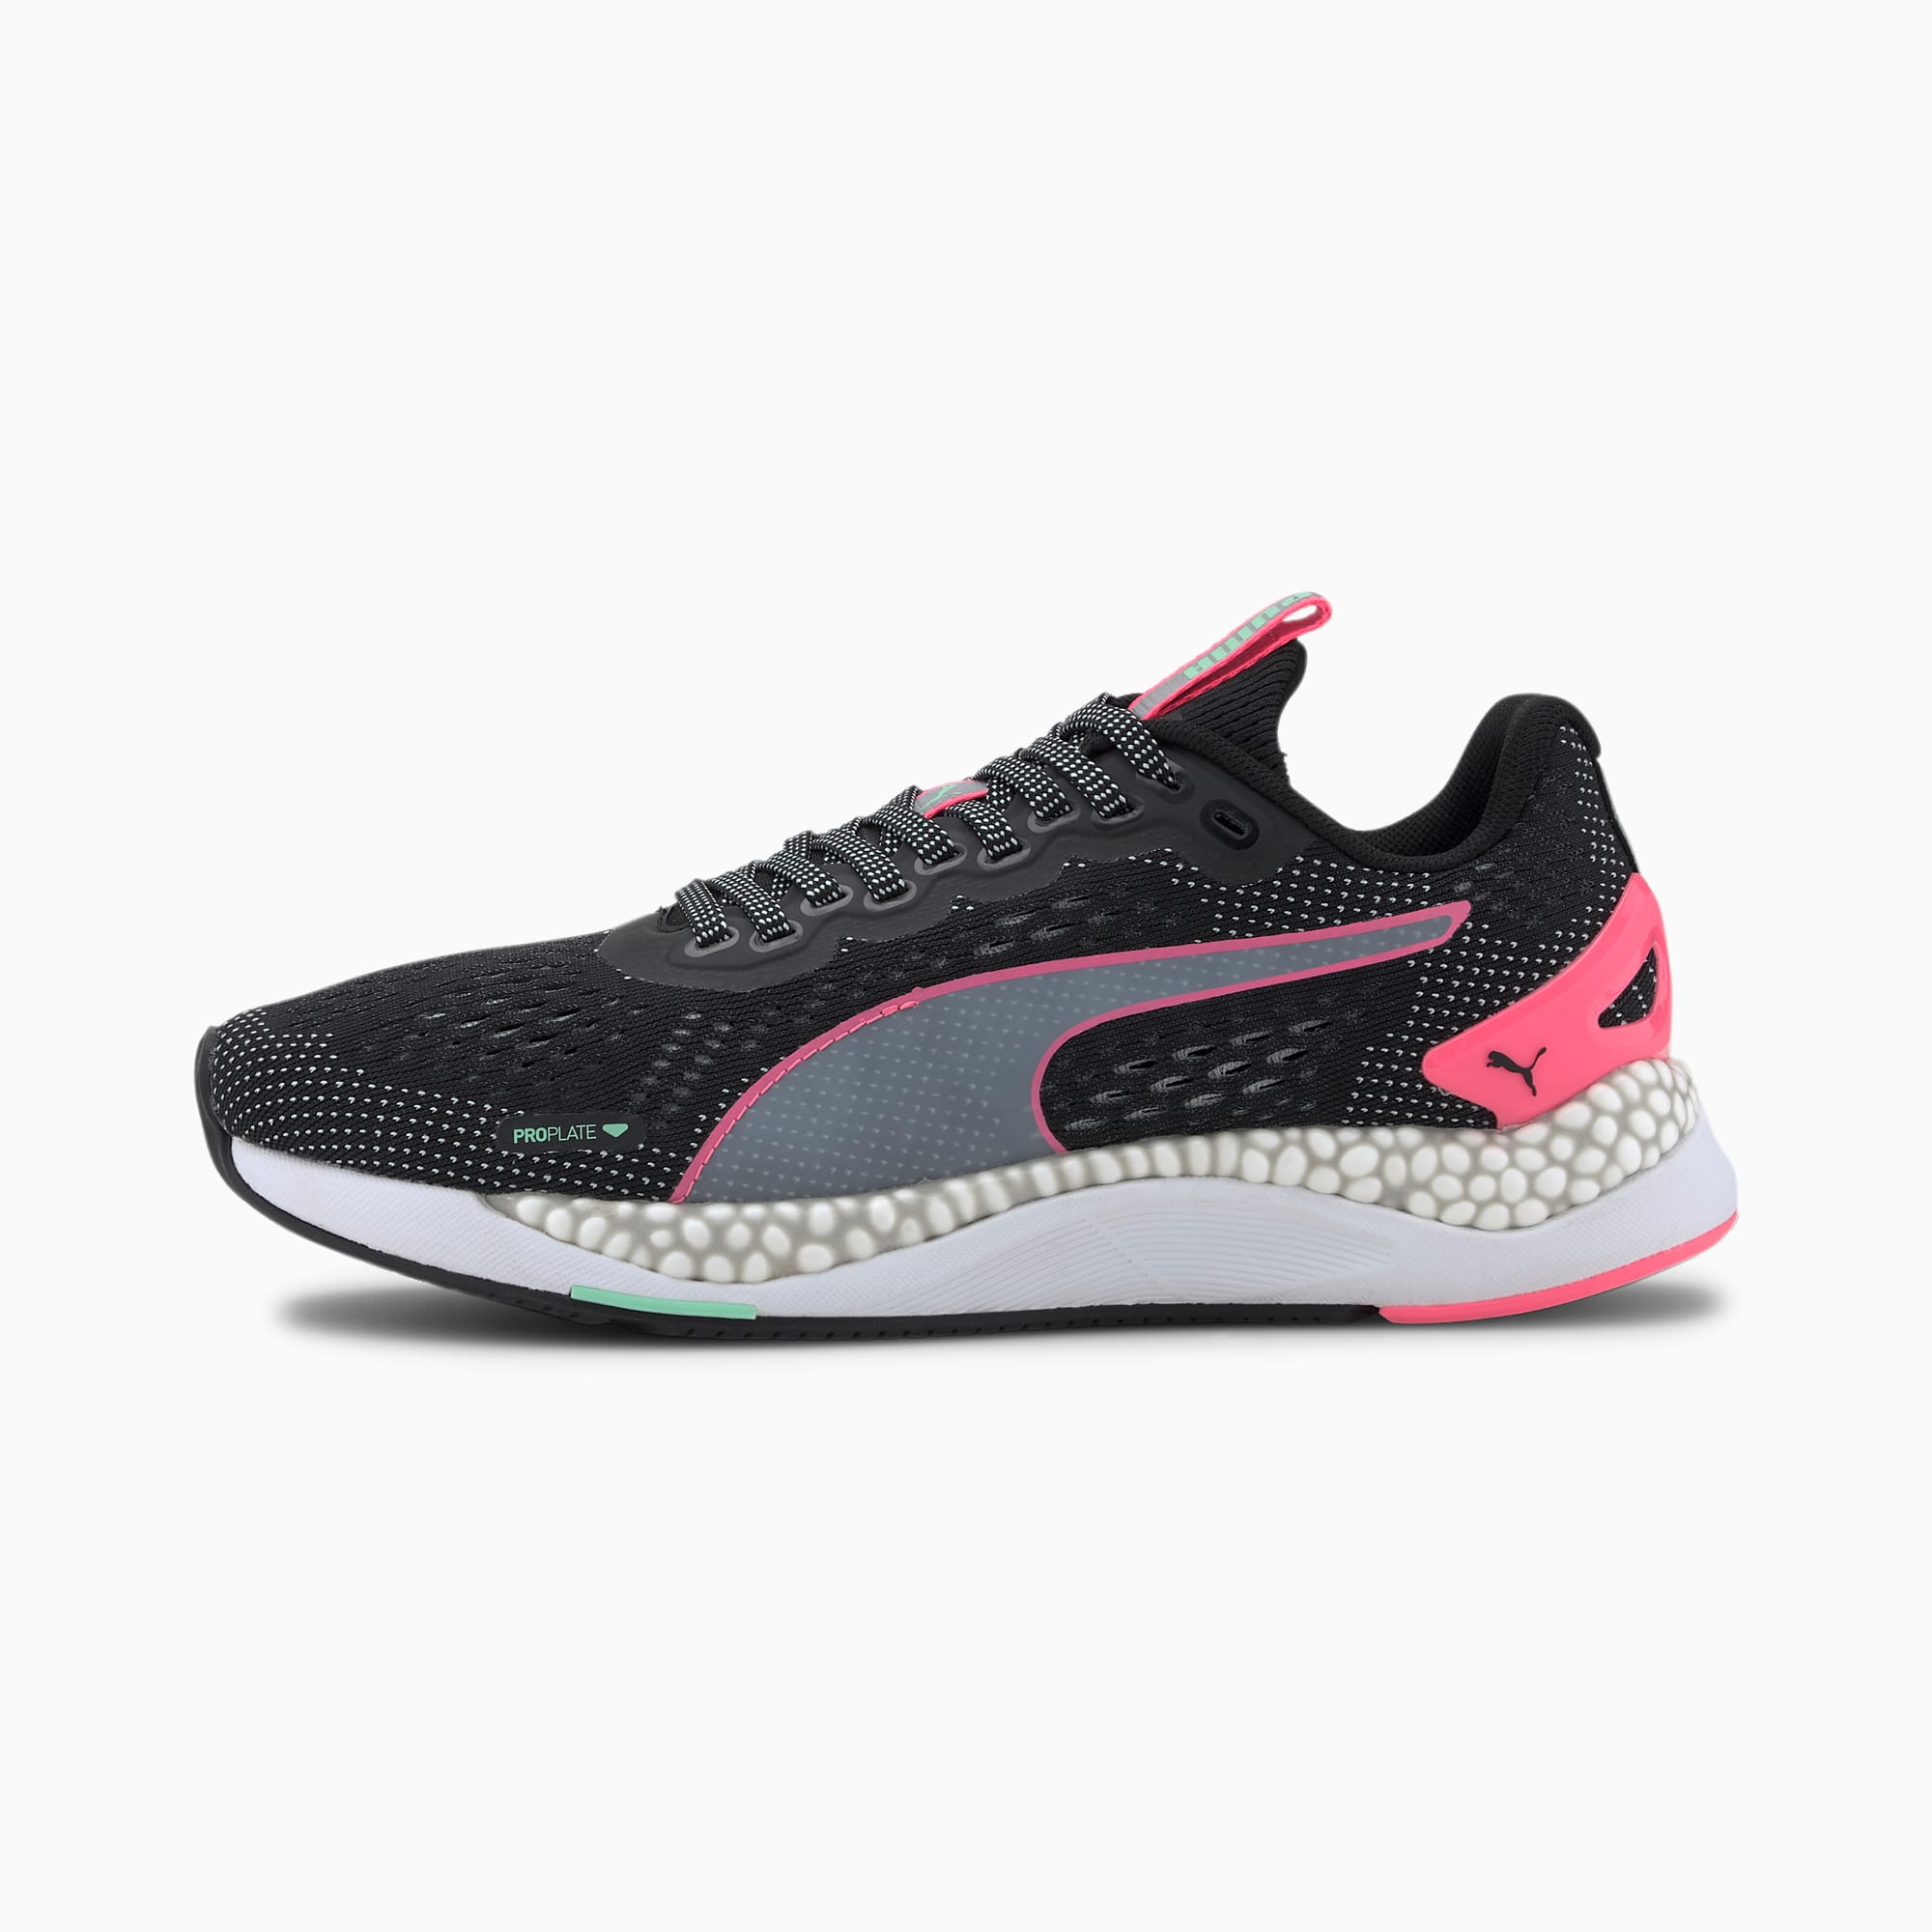 Speed 600 2 Women S Running Shoes Puma Black Ignite Pink Puma Running Puma